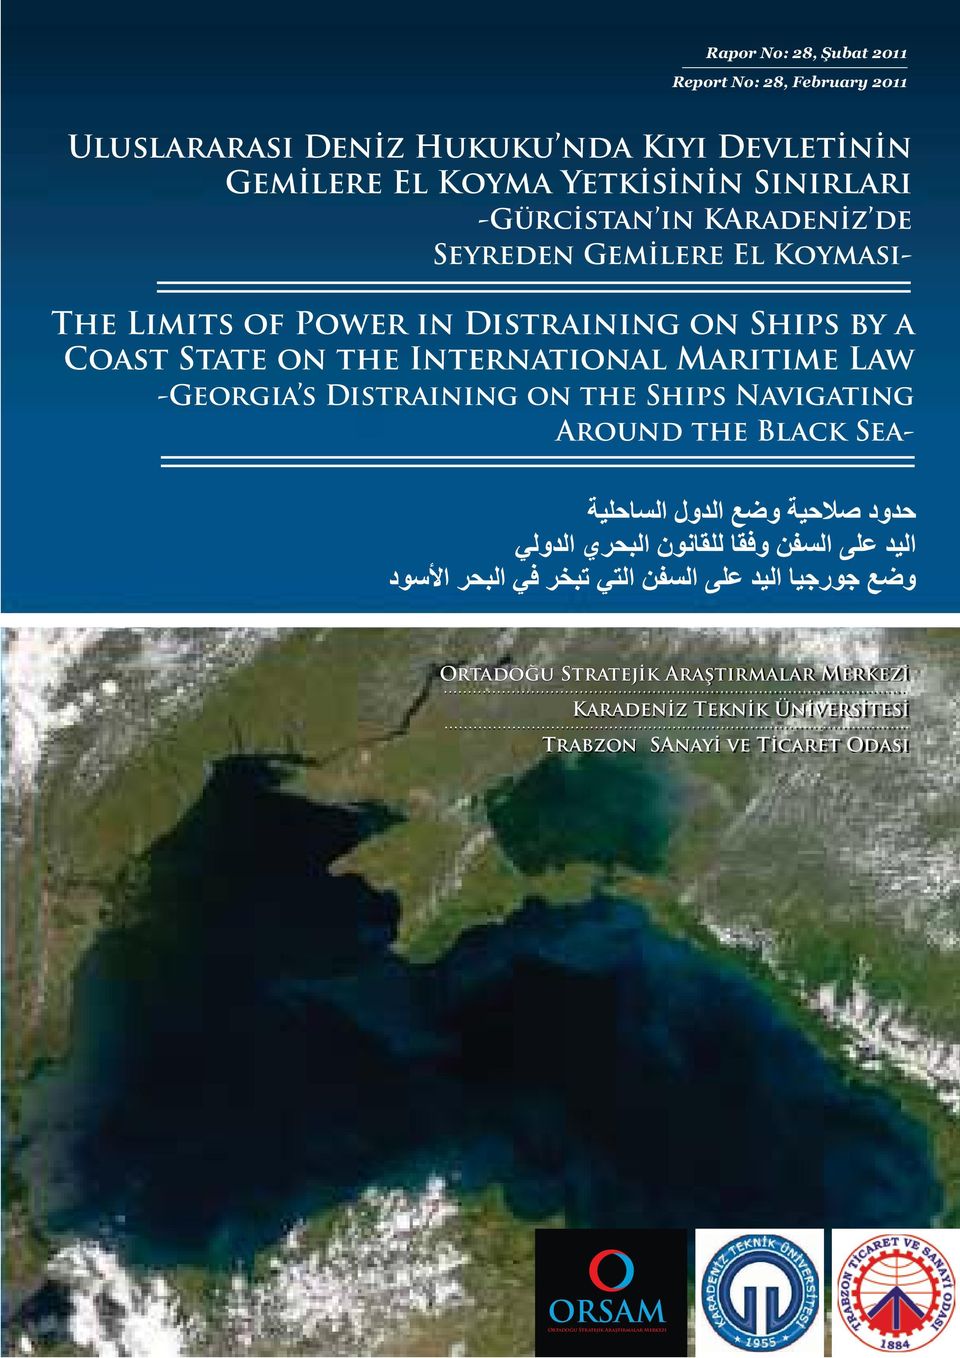 Marıtıme Law -Georgıa s Dıstraınıng on the Shıps Navıgatıng Around the Black Sea- Ortadoğu Stratejik